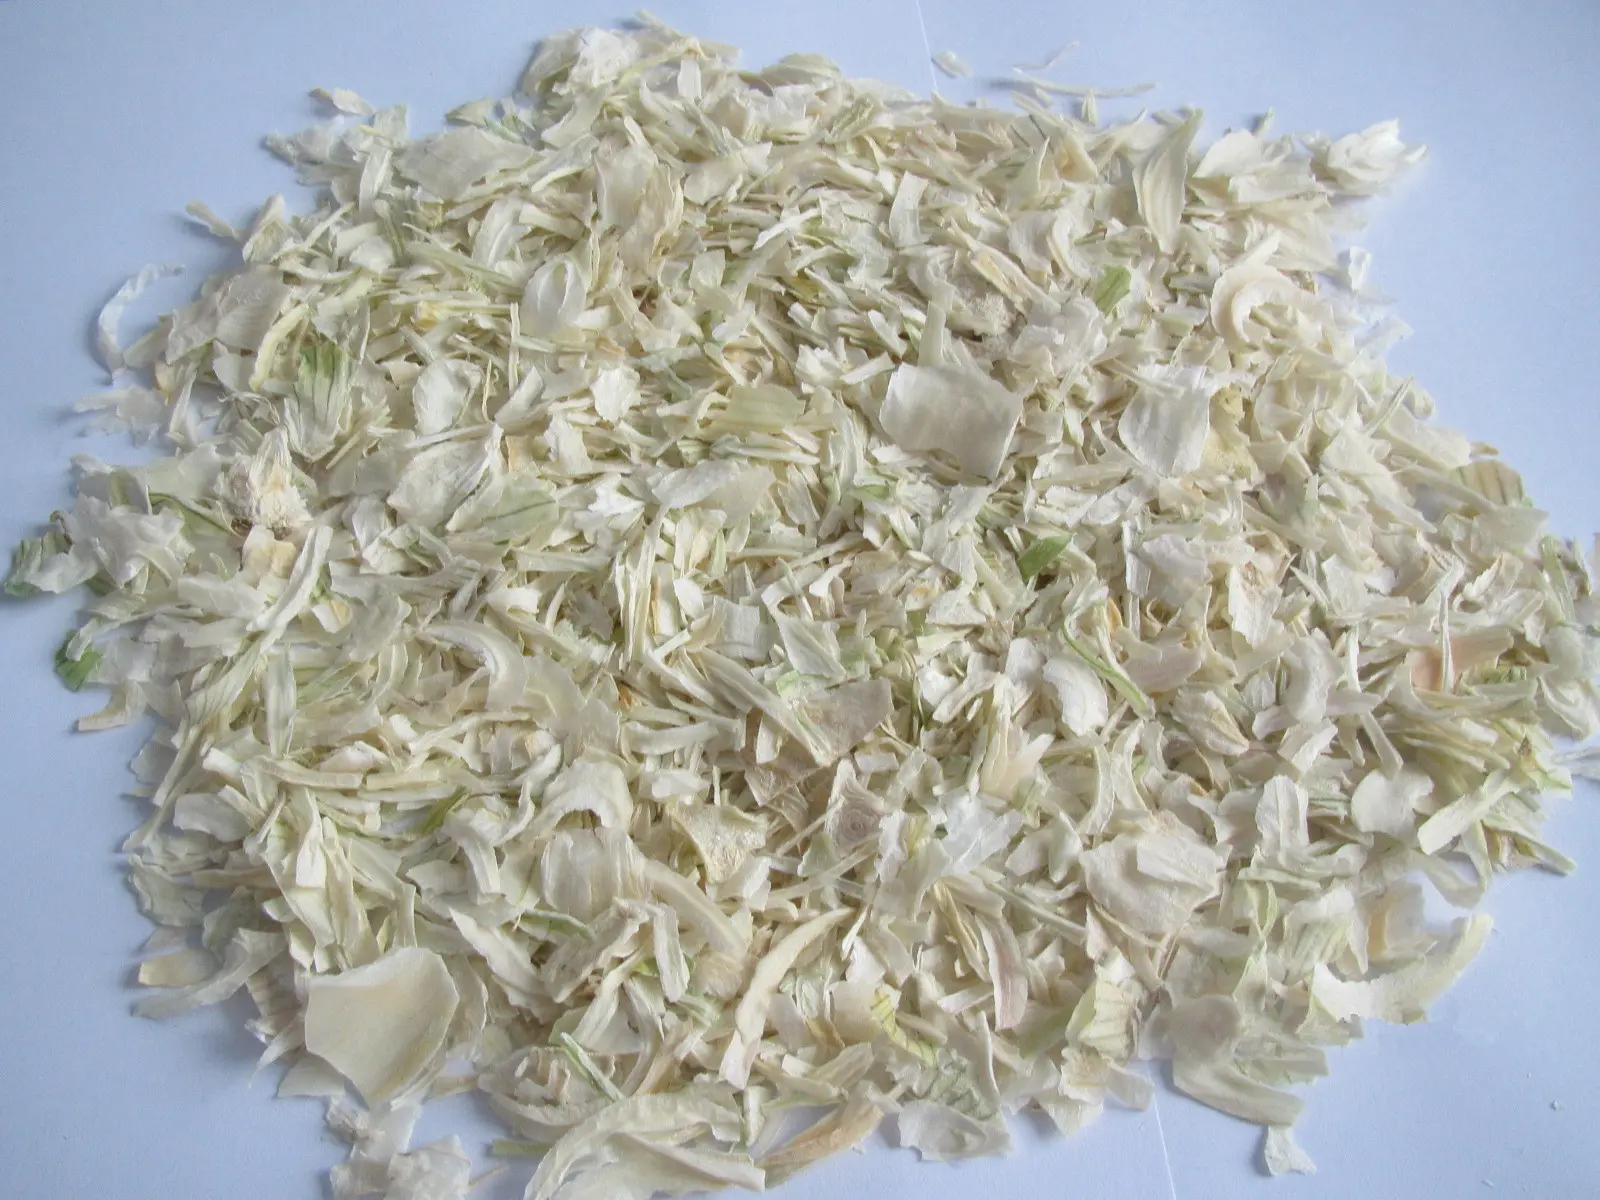 Fiocchi di cipolla disidratata verdure essiccate convenienti cipolla secca professionale fabbrica diretta all'ingrosso di alta qualità